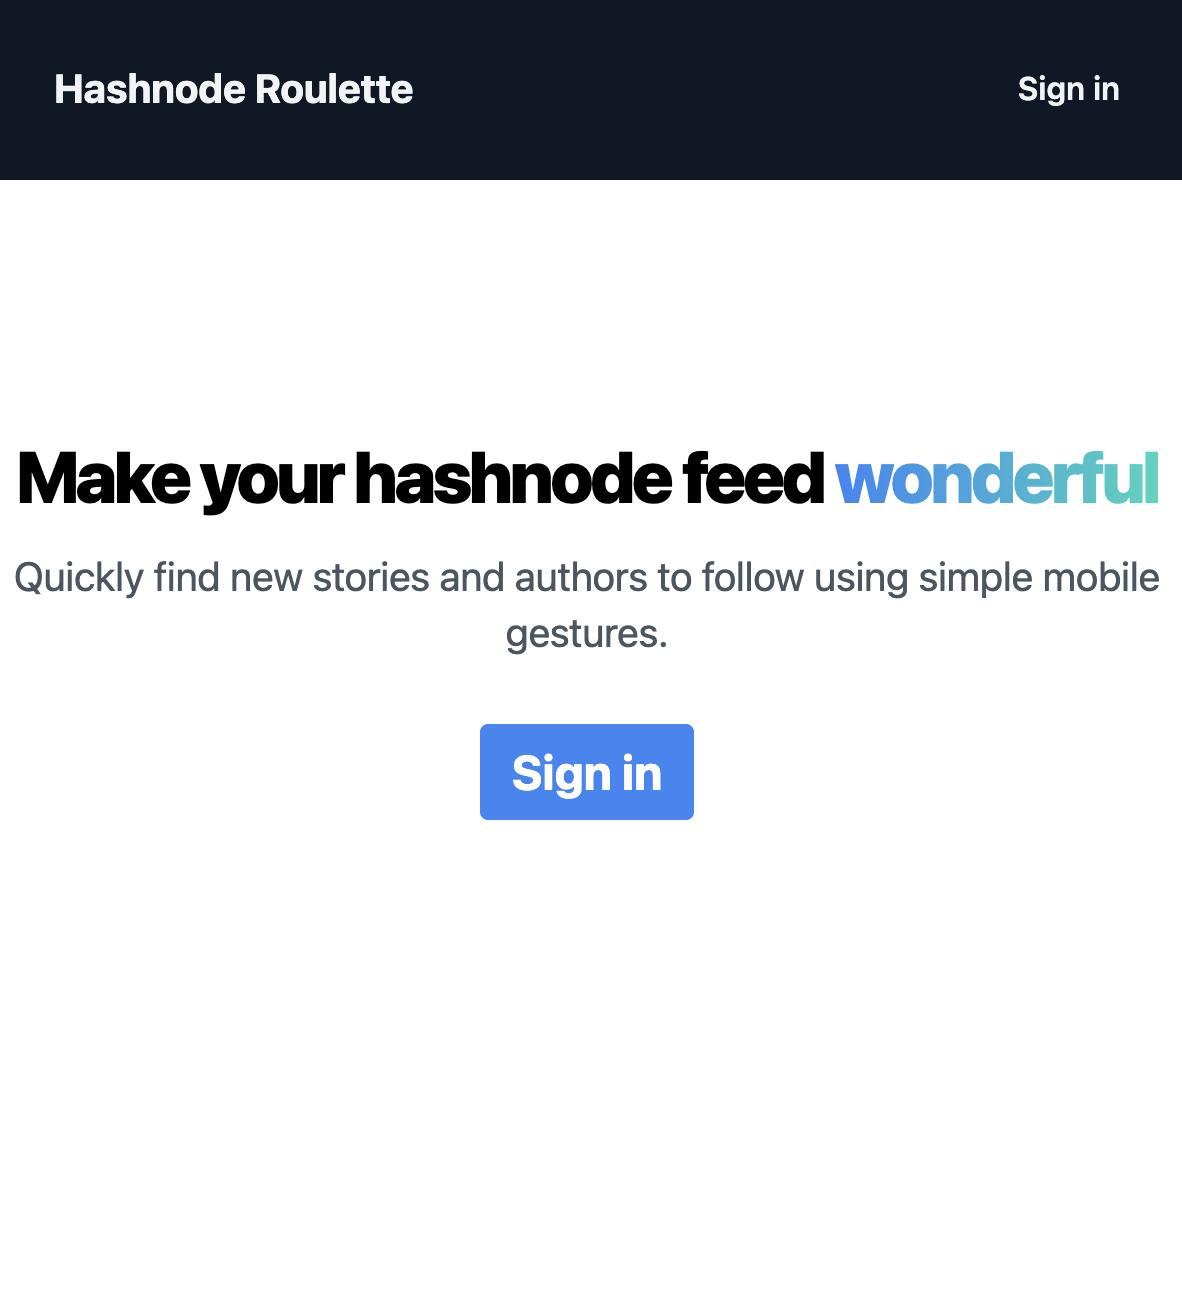 Hashnode Roulette landing page